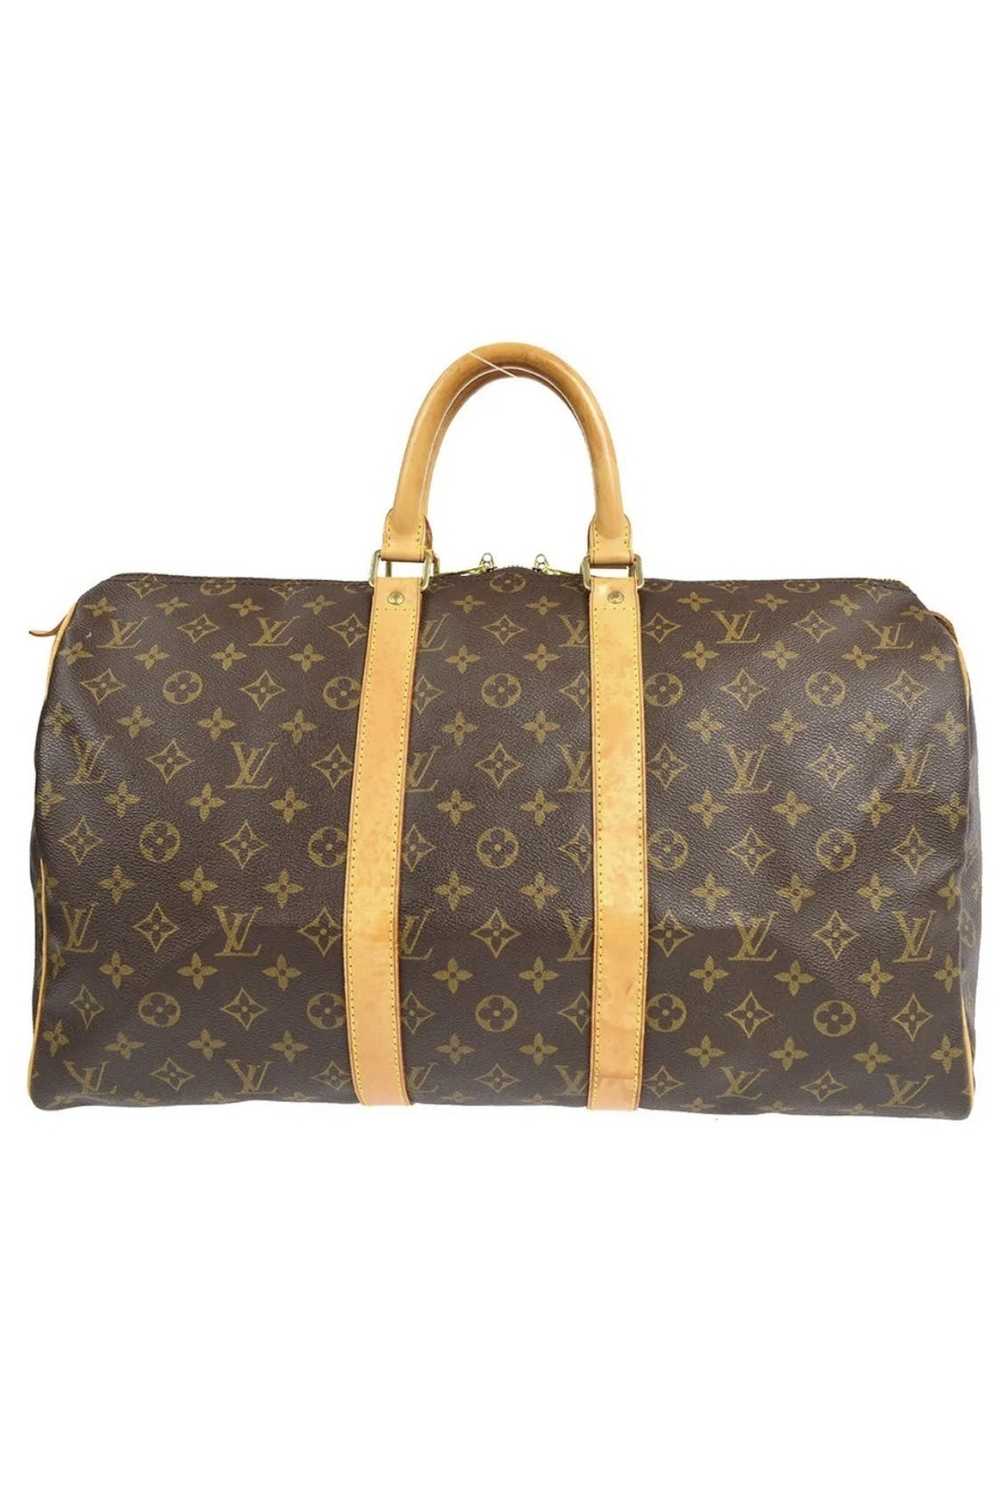 Louis Vuitton Keepall 45 Duffle Bag - image 1